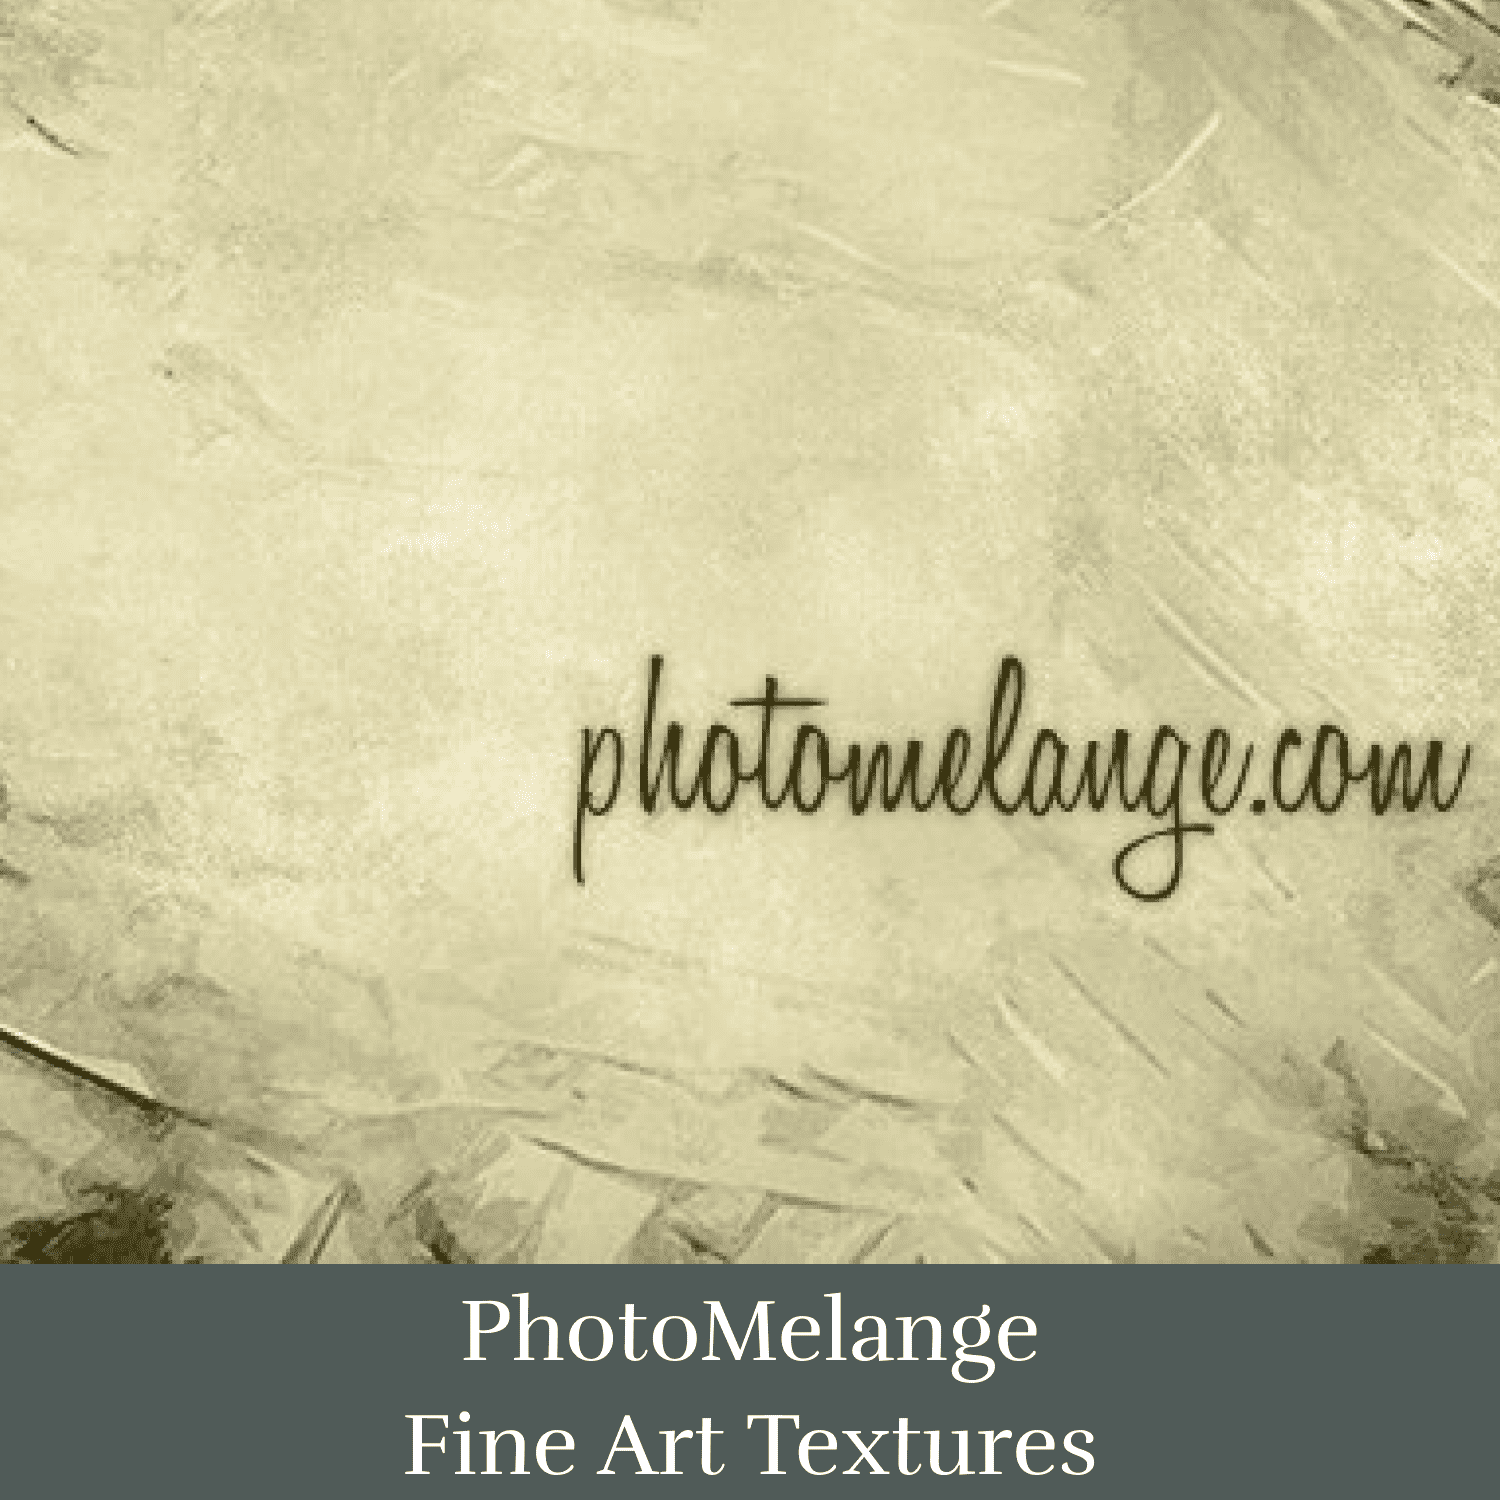 PhotoMelange Fine Art Textures cover.